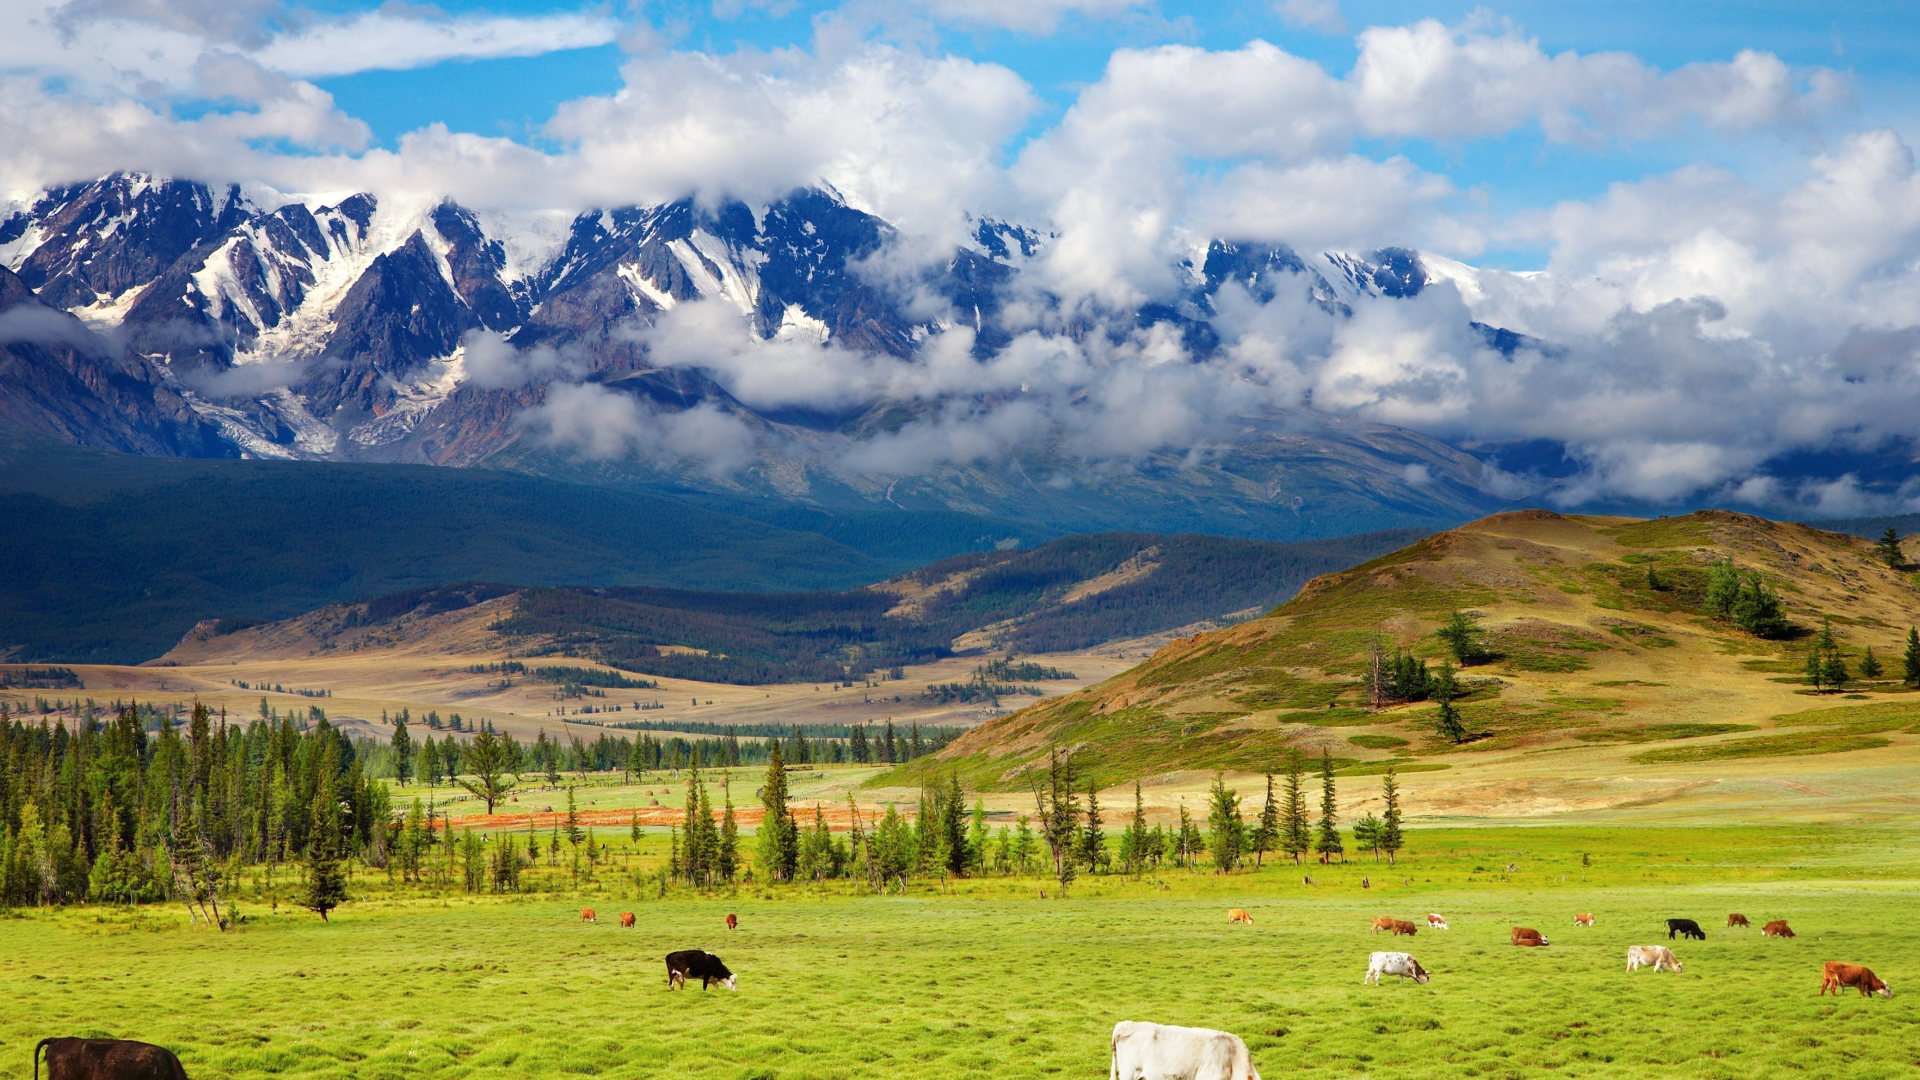 highlands, пастбище, green valley, крупнорогатый, пейзаж, долина, природа, животные, cattle, красота, скот, горы